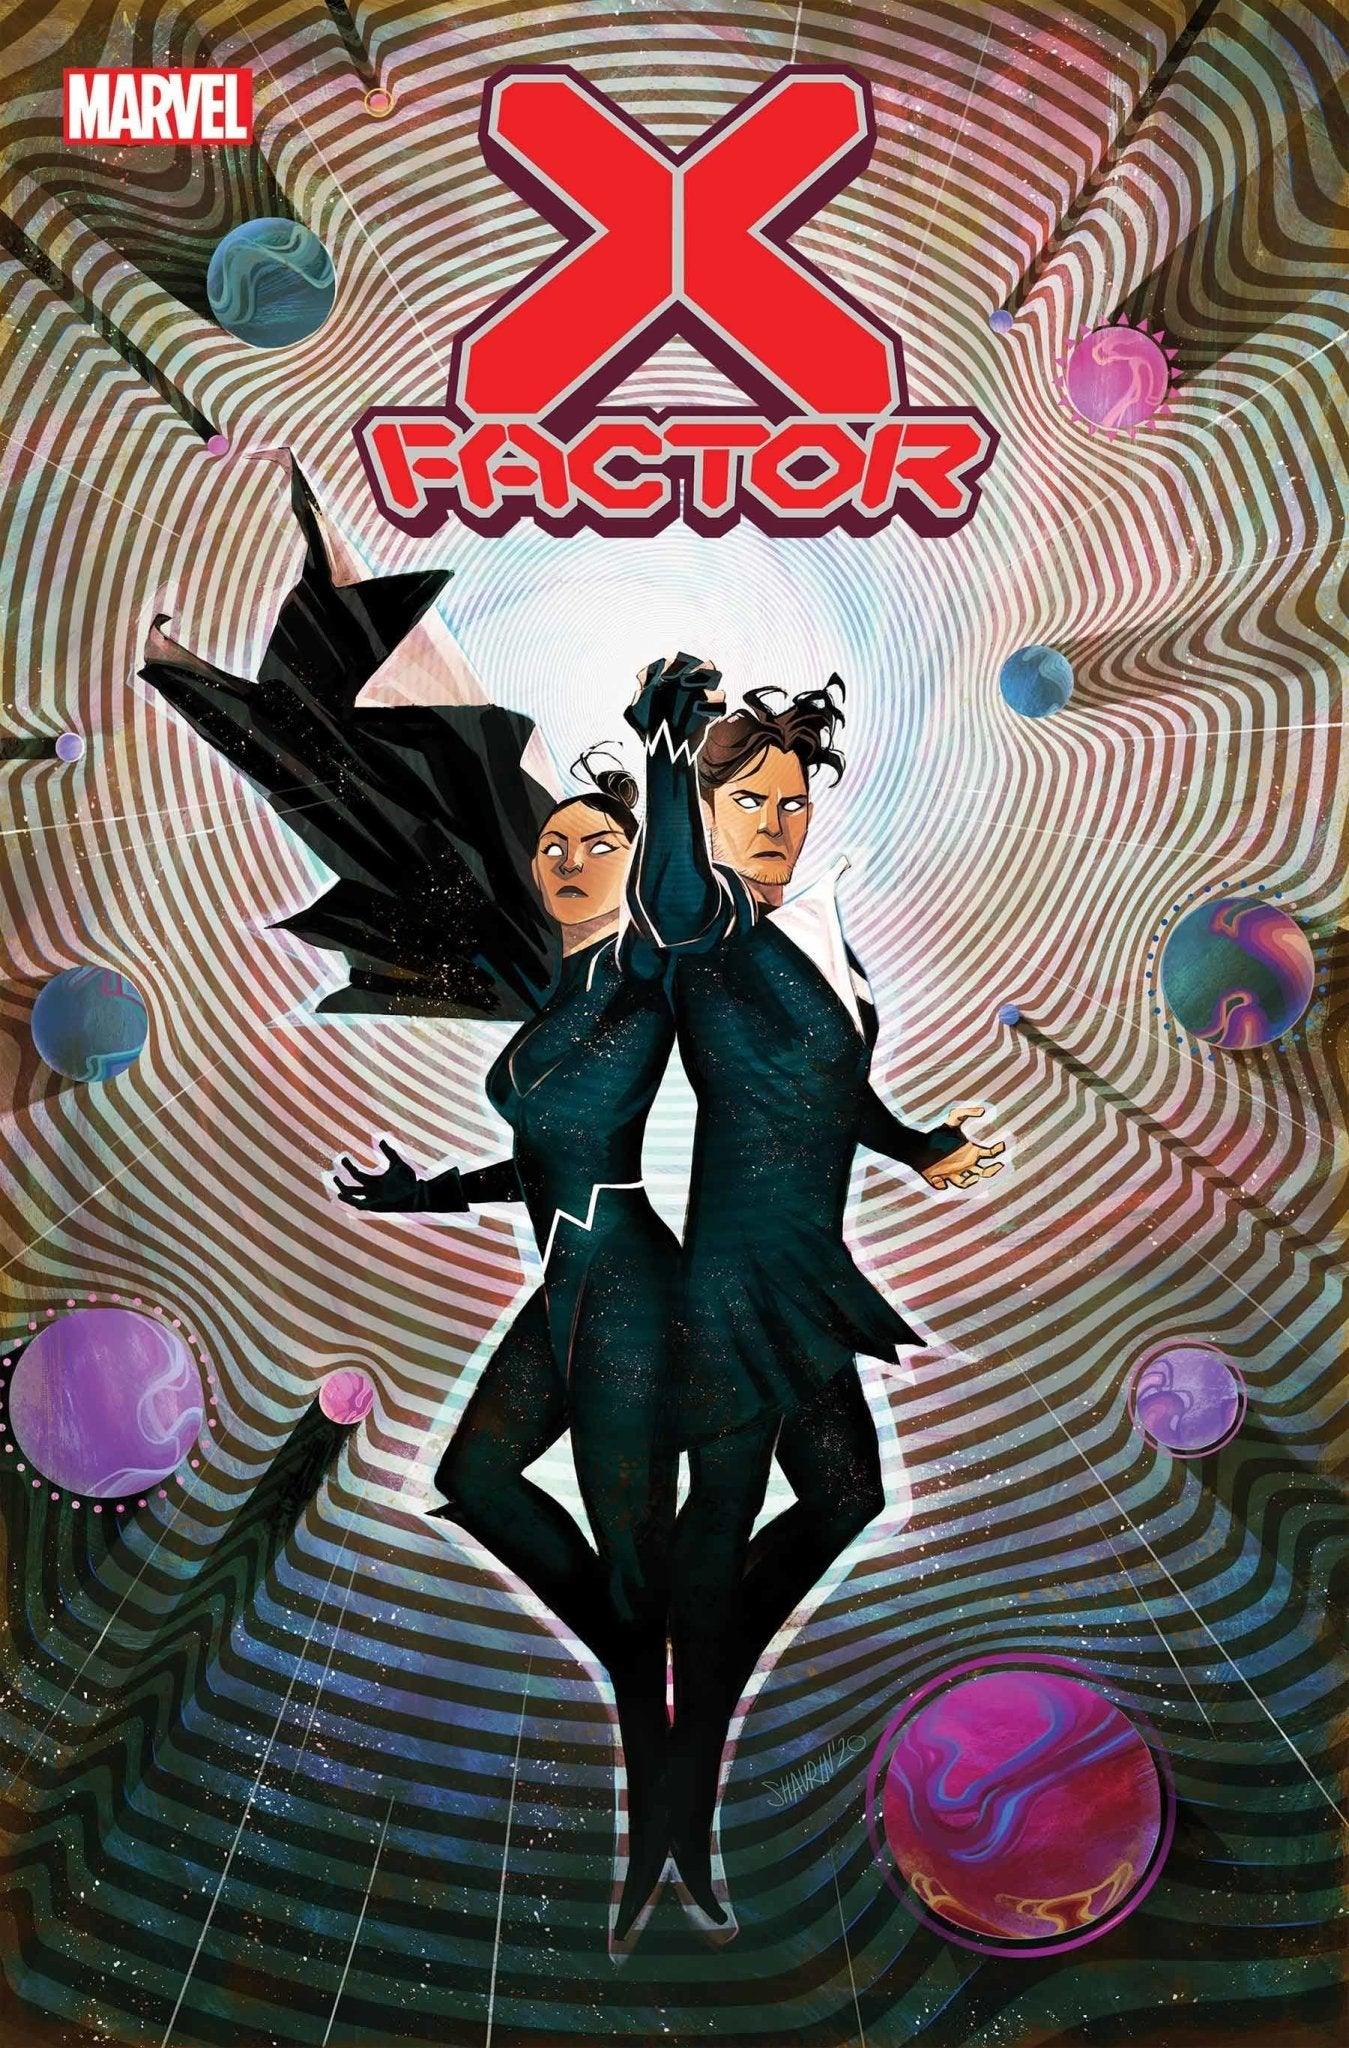 X-FACTOR #5 XOS (SHIPS 12-02-20) - PCKComics.com